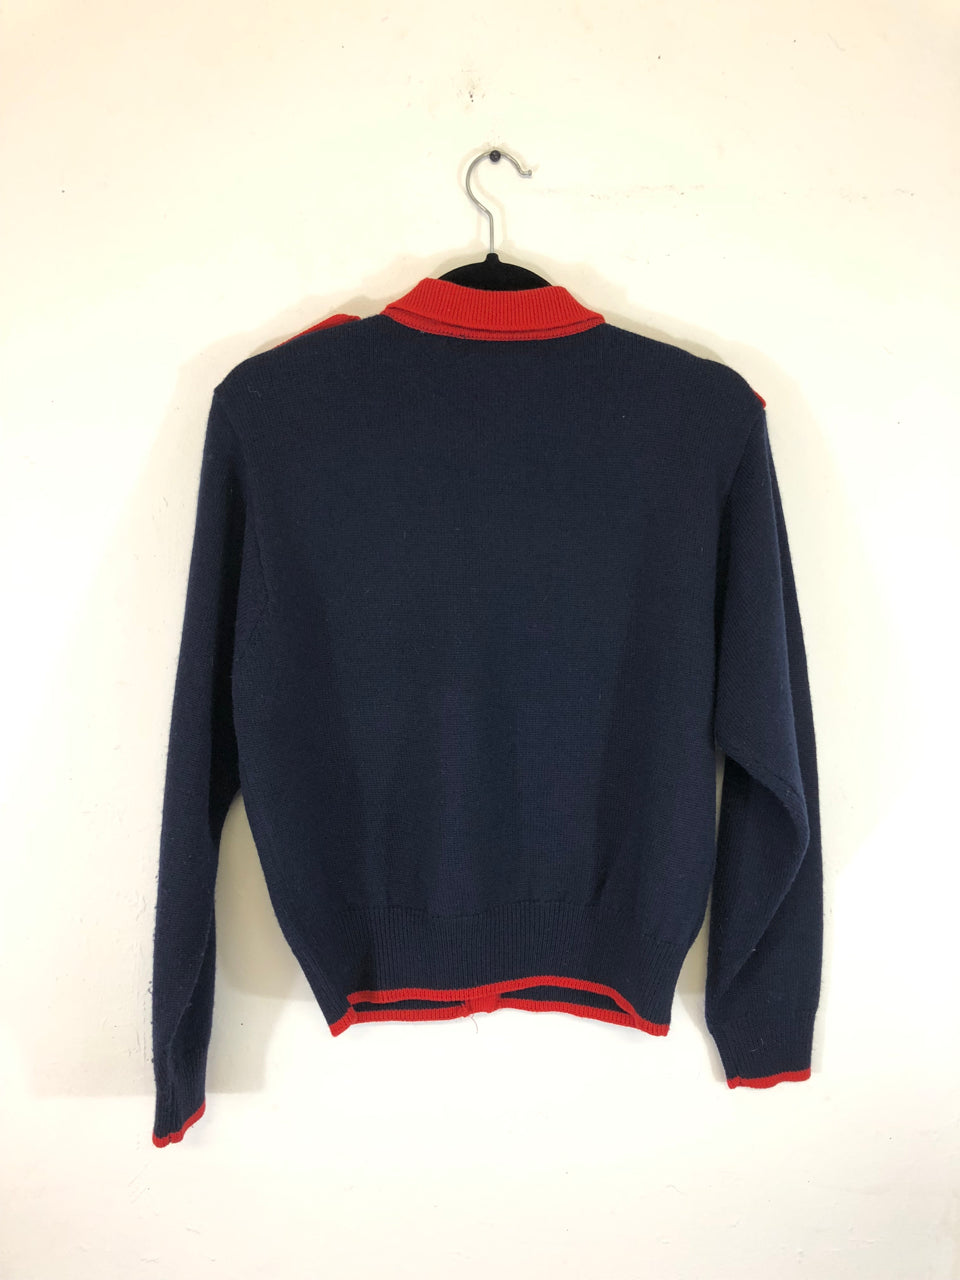 Liz Claiborne Button-Up Sweater